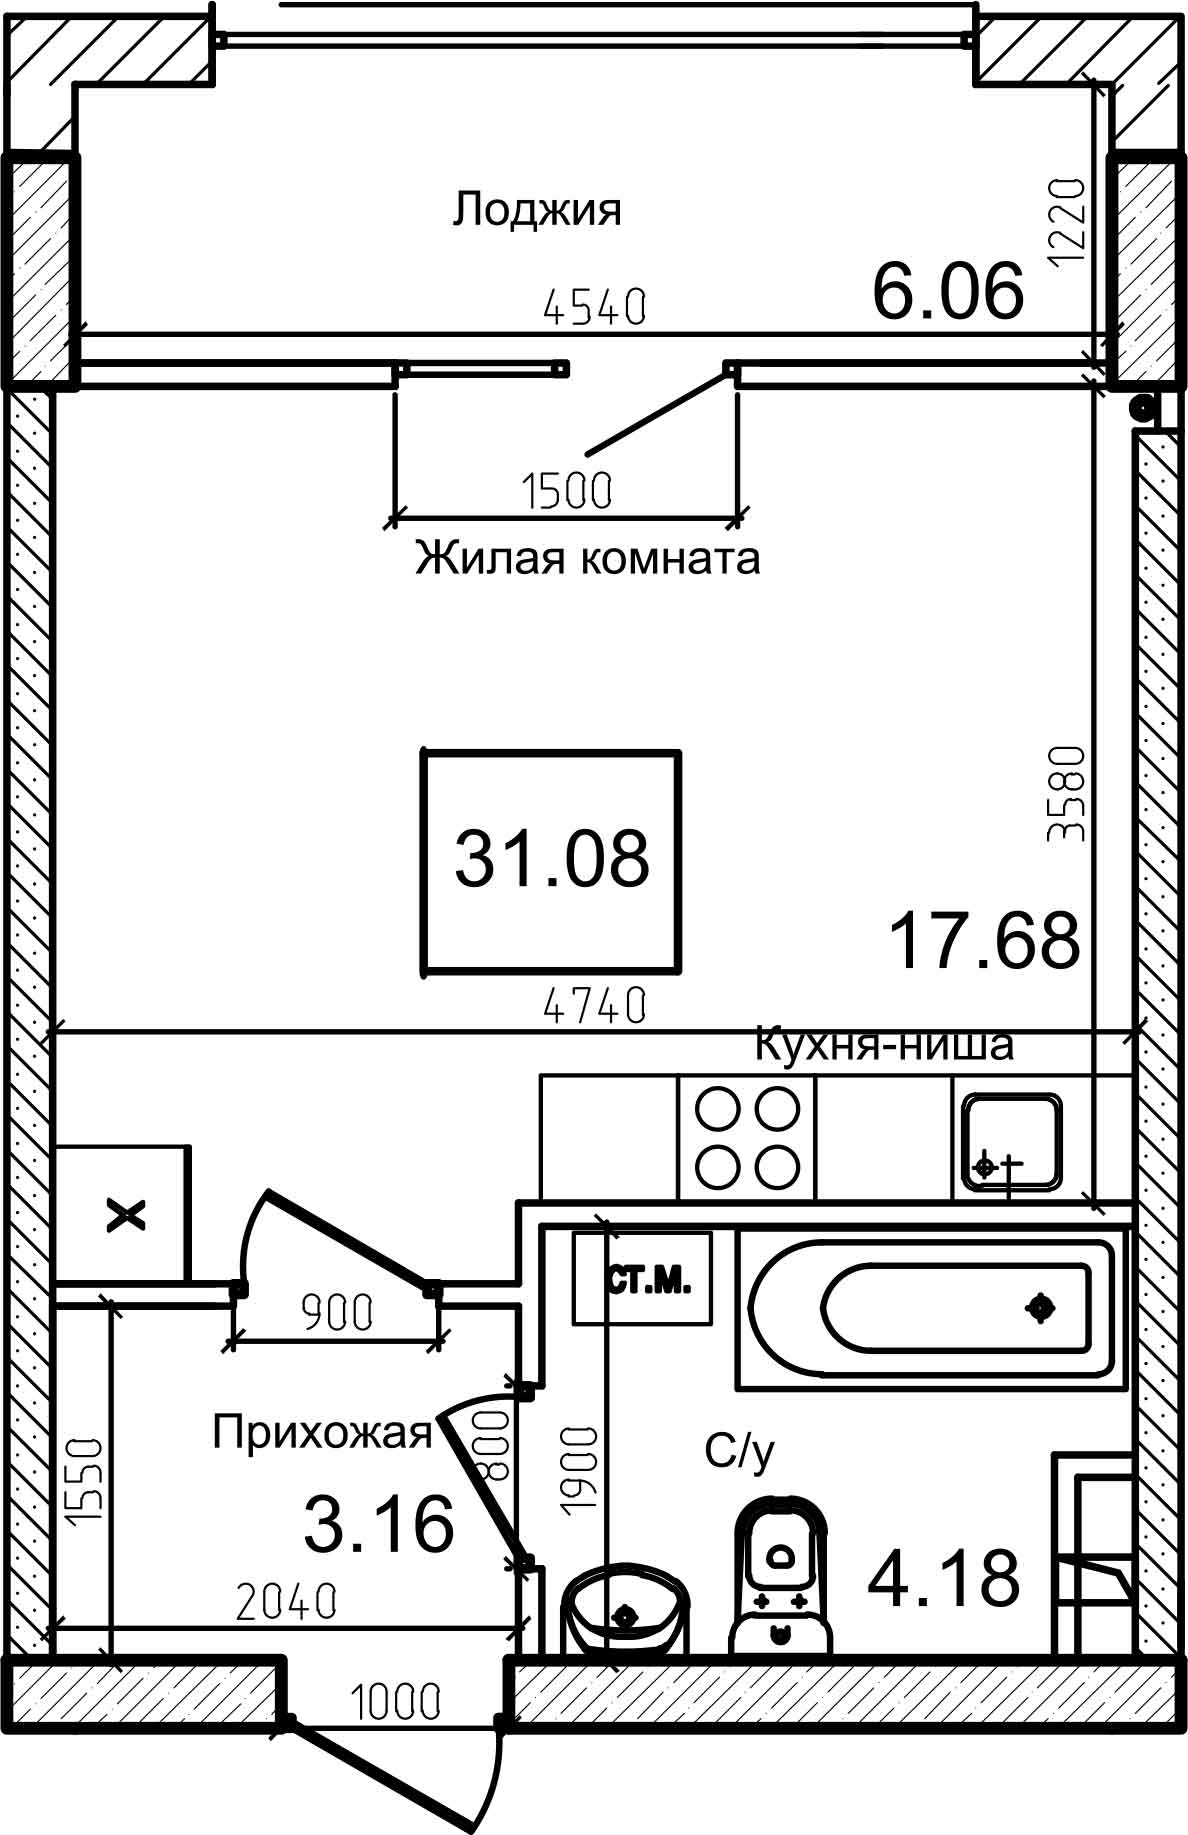 Planning Smart flats area 31.2m2, AB-08-12/00008.